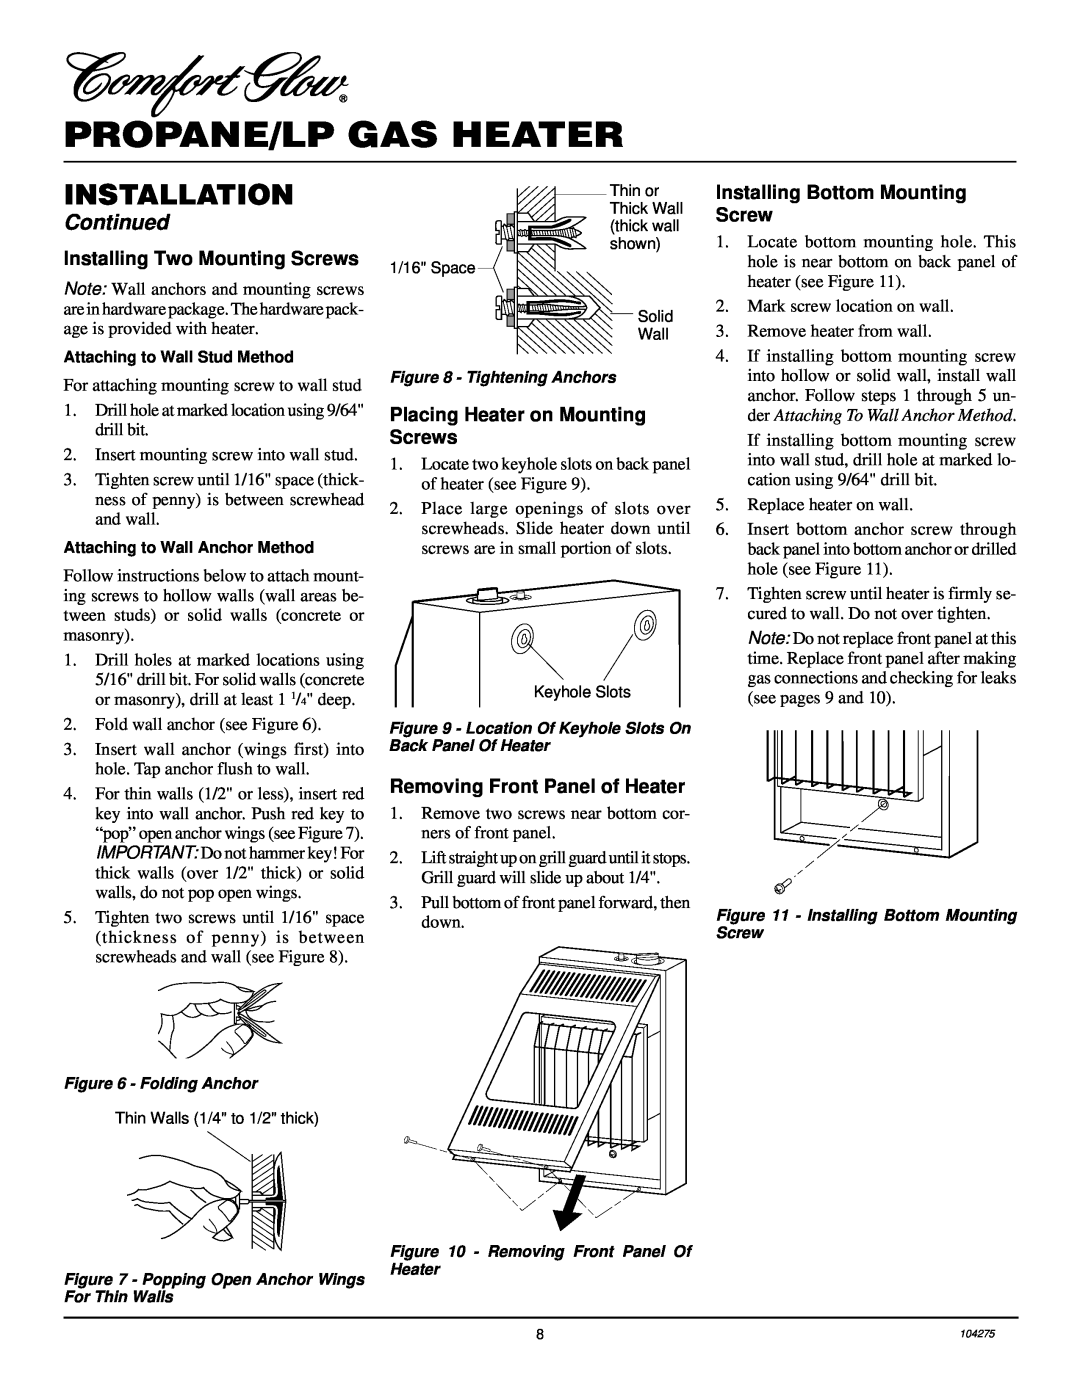 Desa CGP10RLA installation manual Propane/Lp Gas Heater, Installation, Continued, Installing Two Mounting Screws 